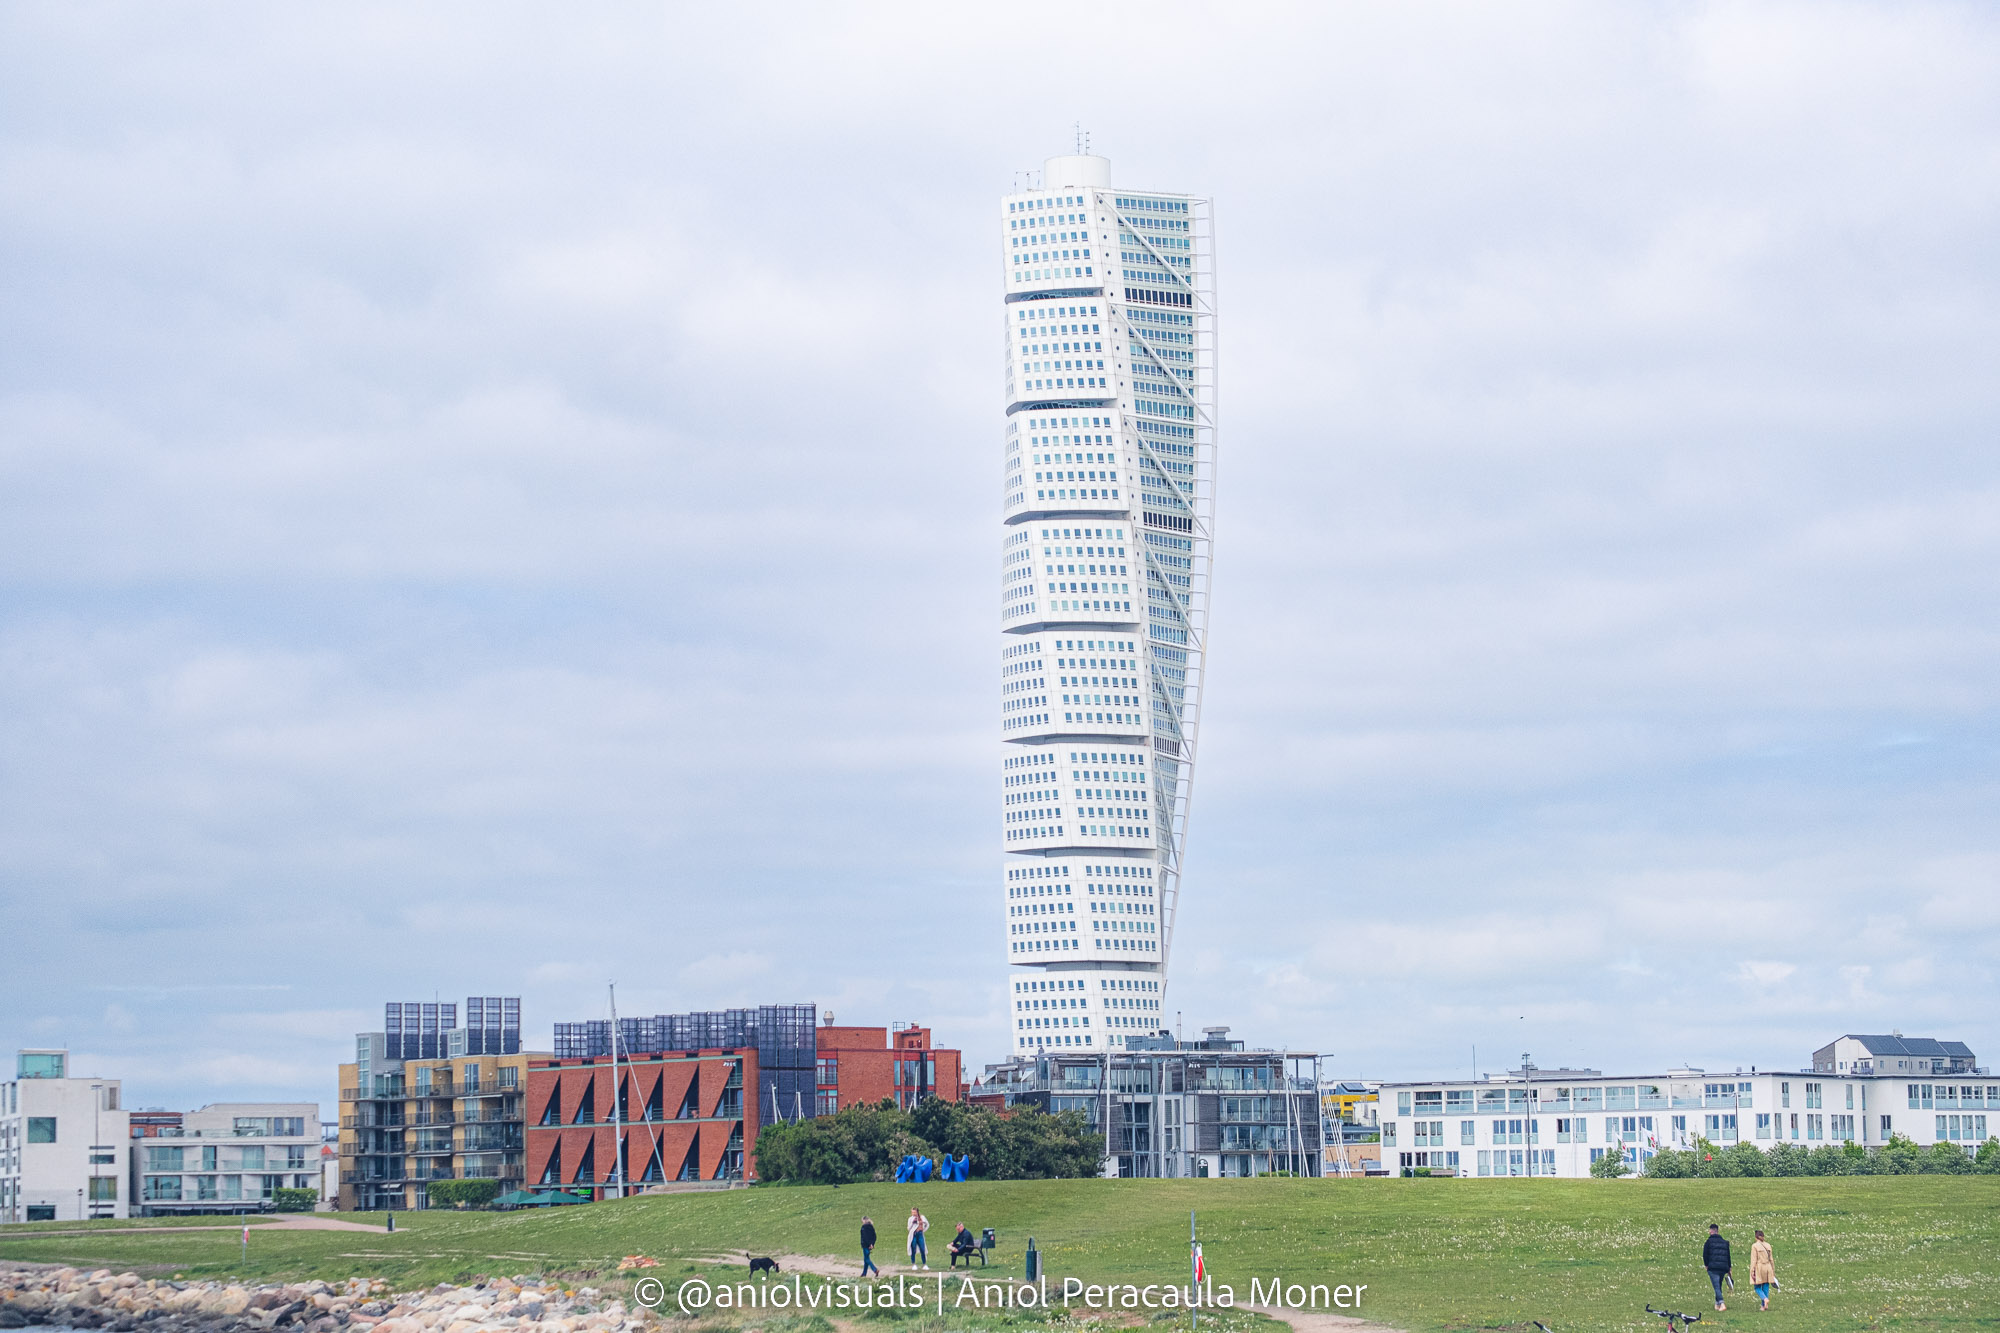 Malmö's turning torso skyscraper seen from the beach